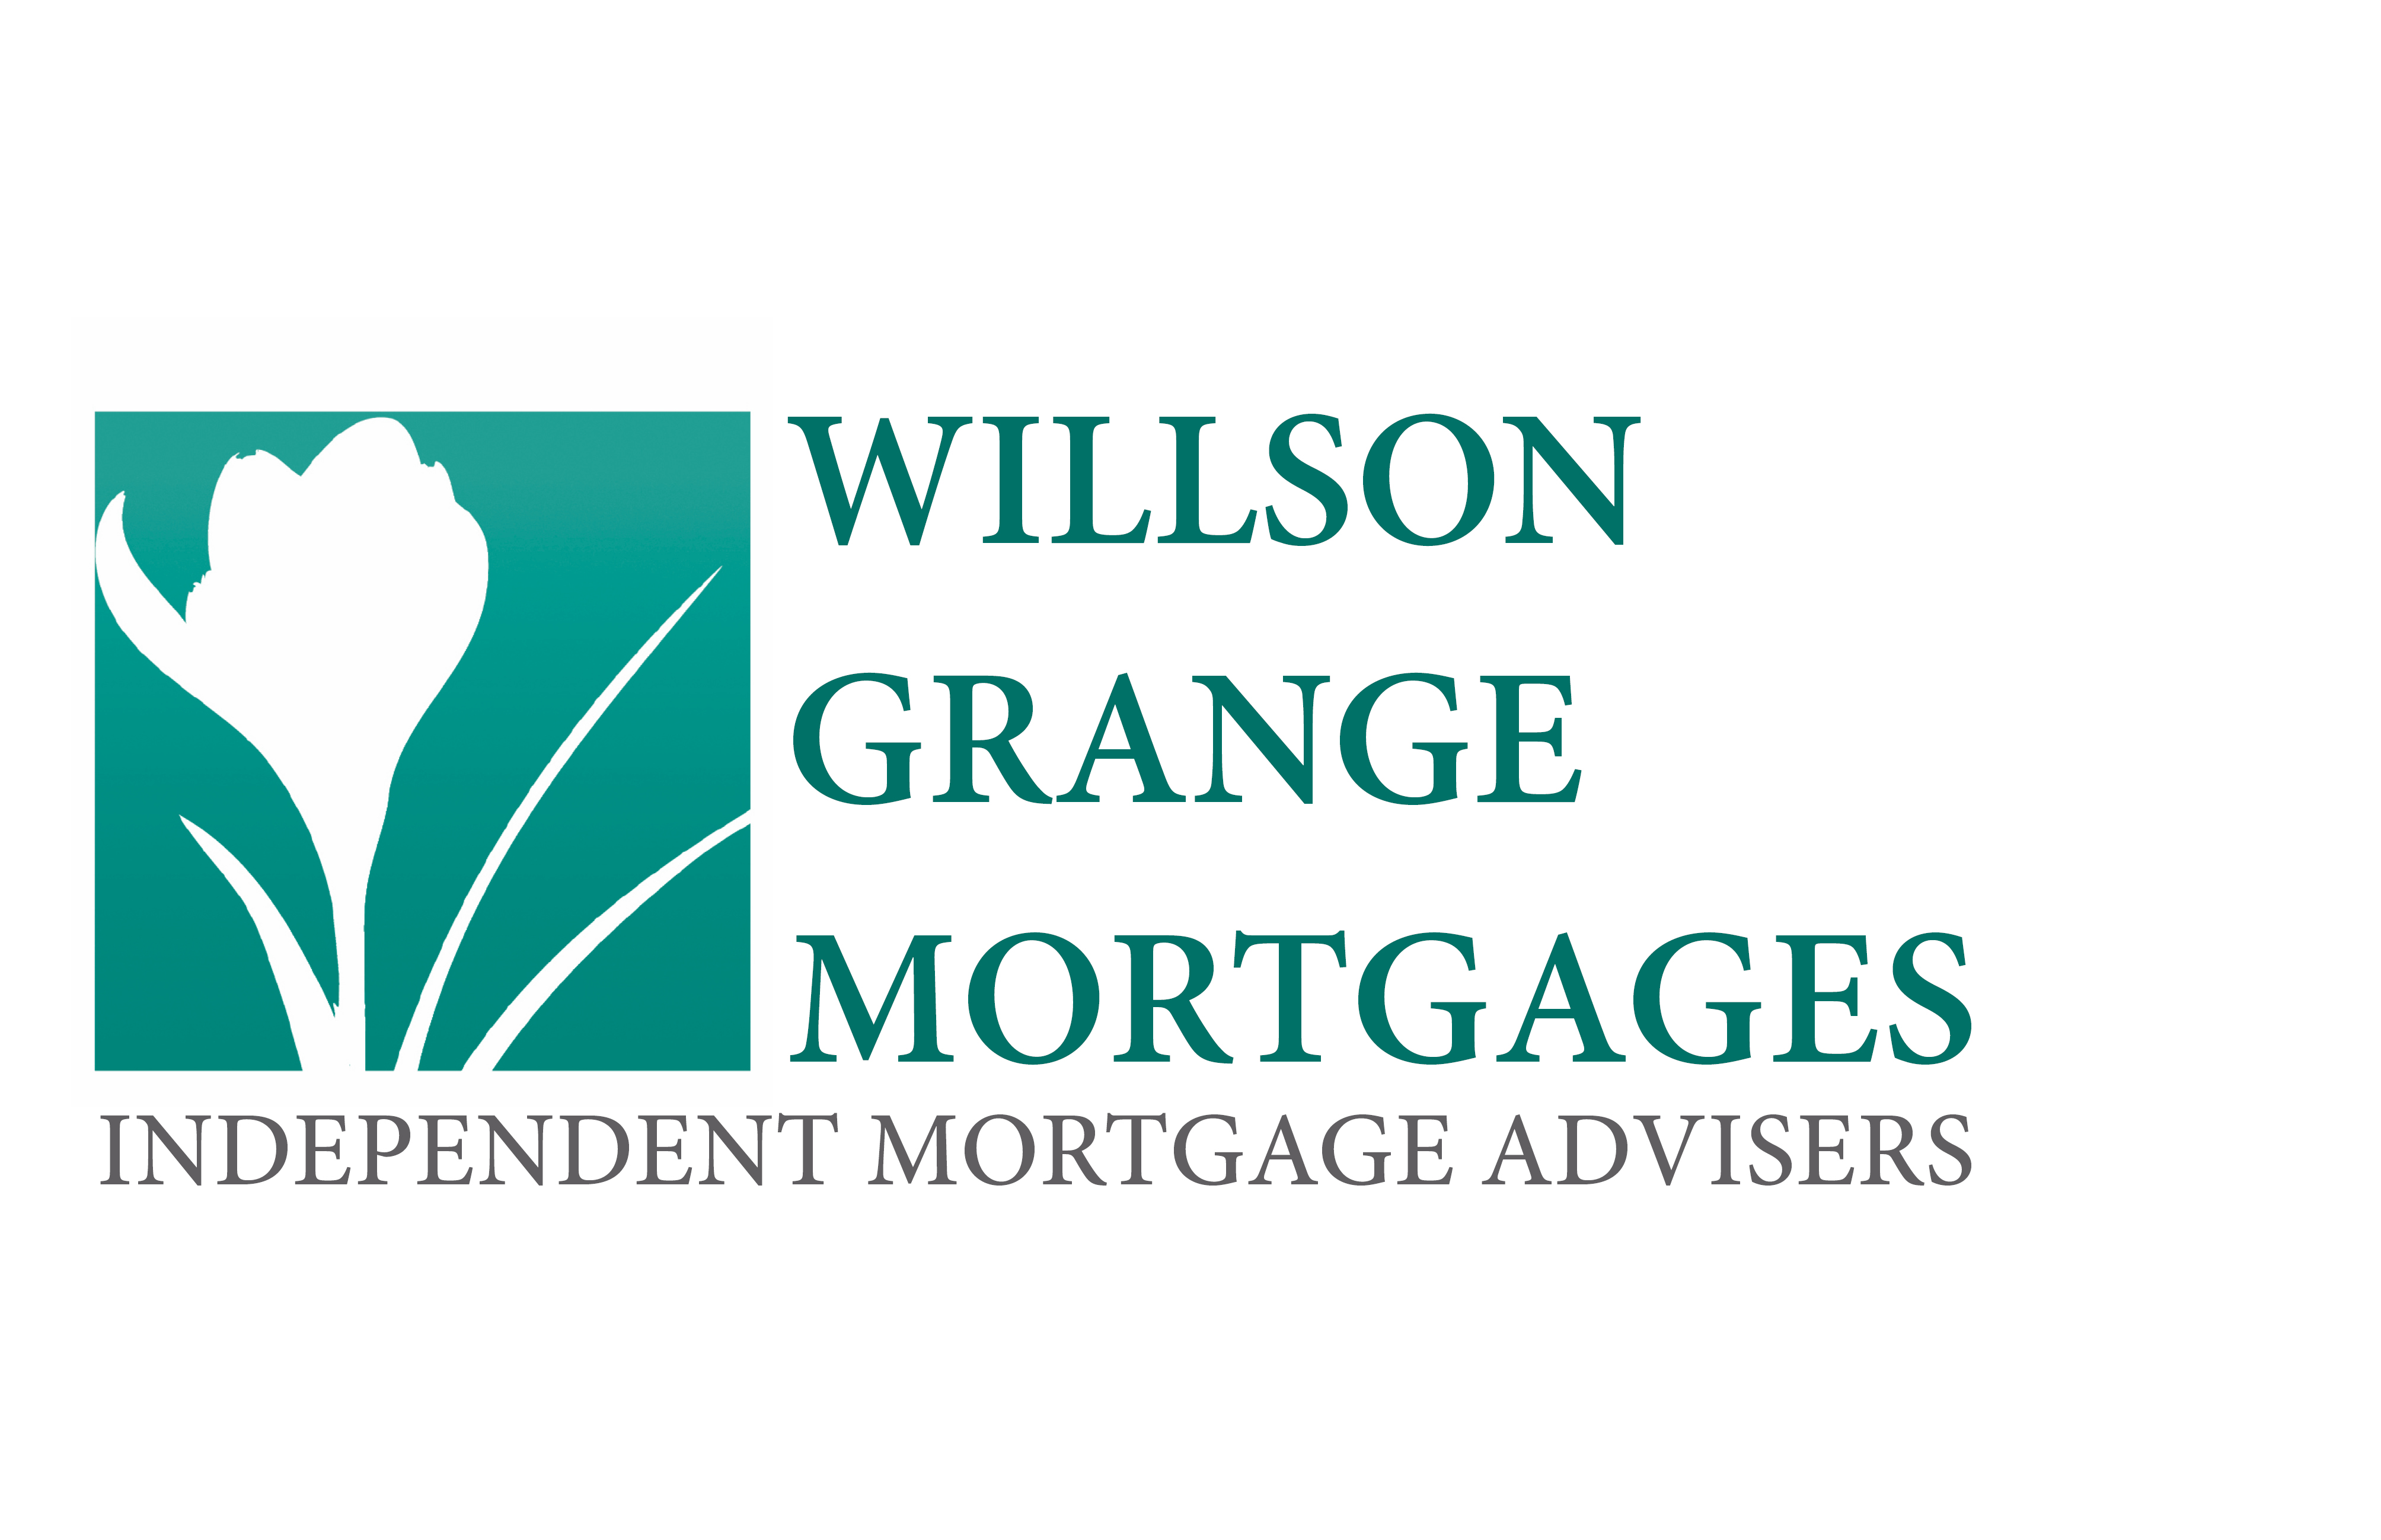 Wilson Grange Mortgages